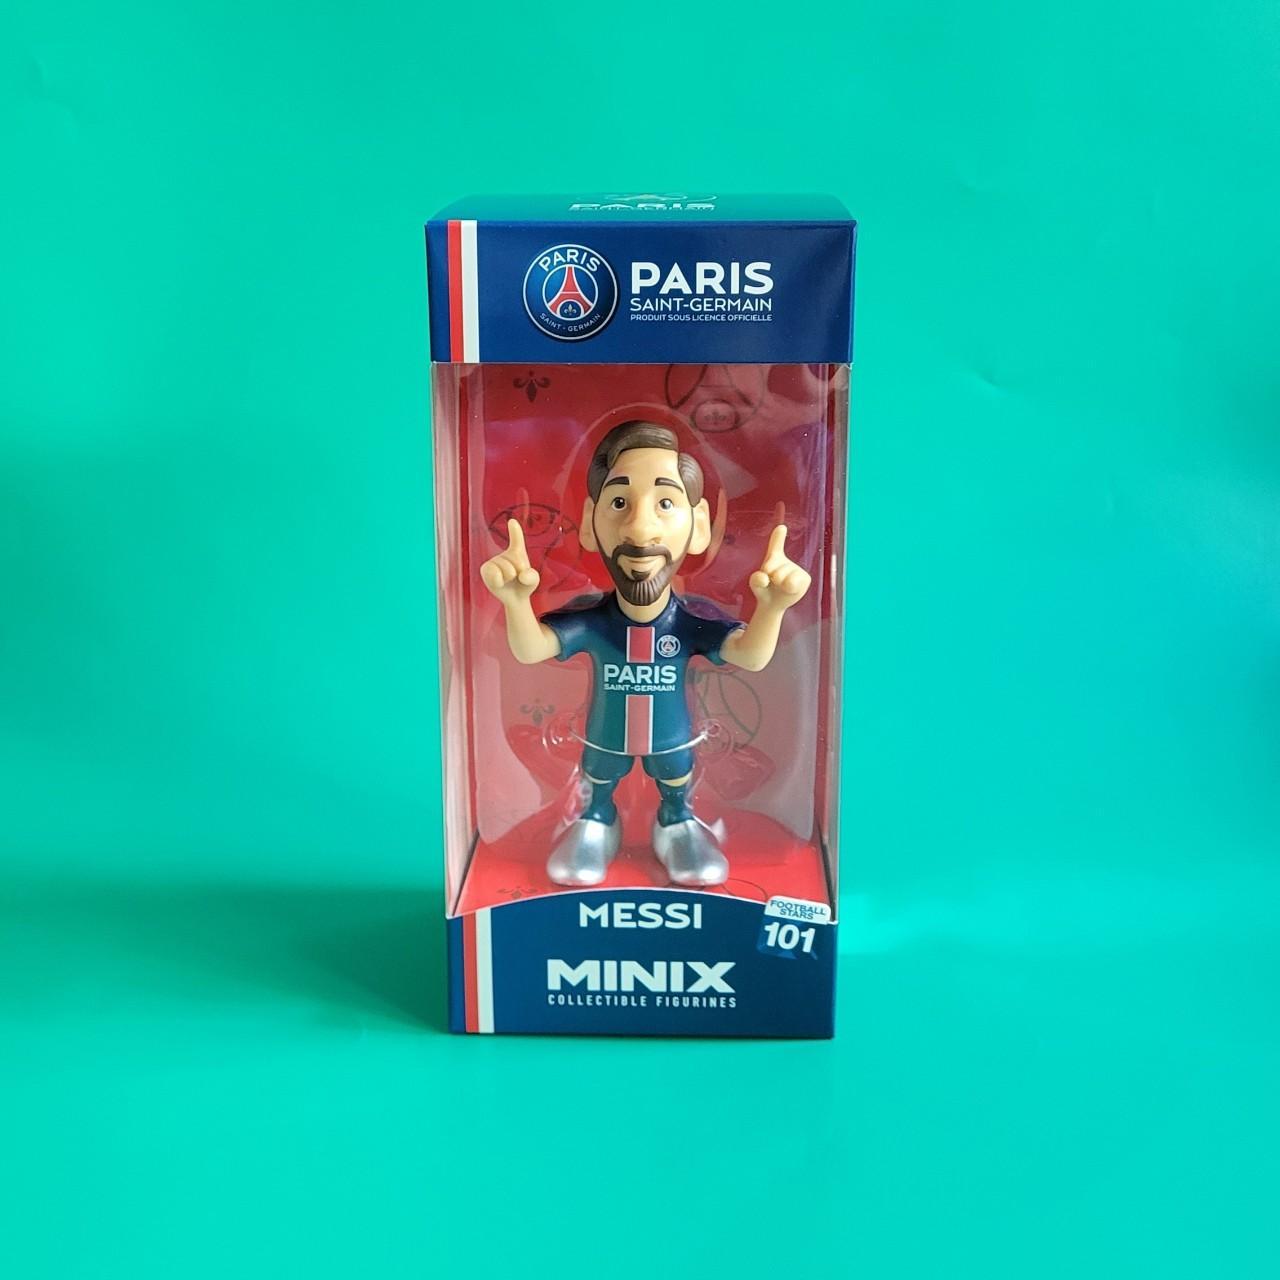 Minix Collectible Figurines Messi (PSG)